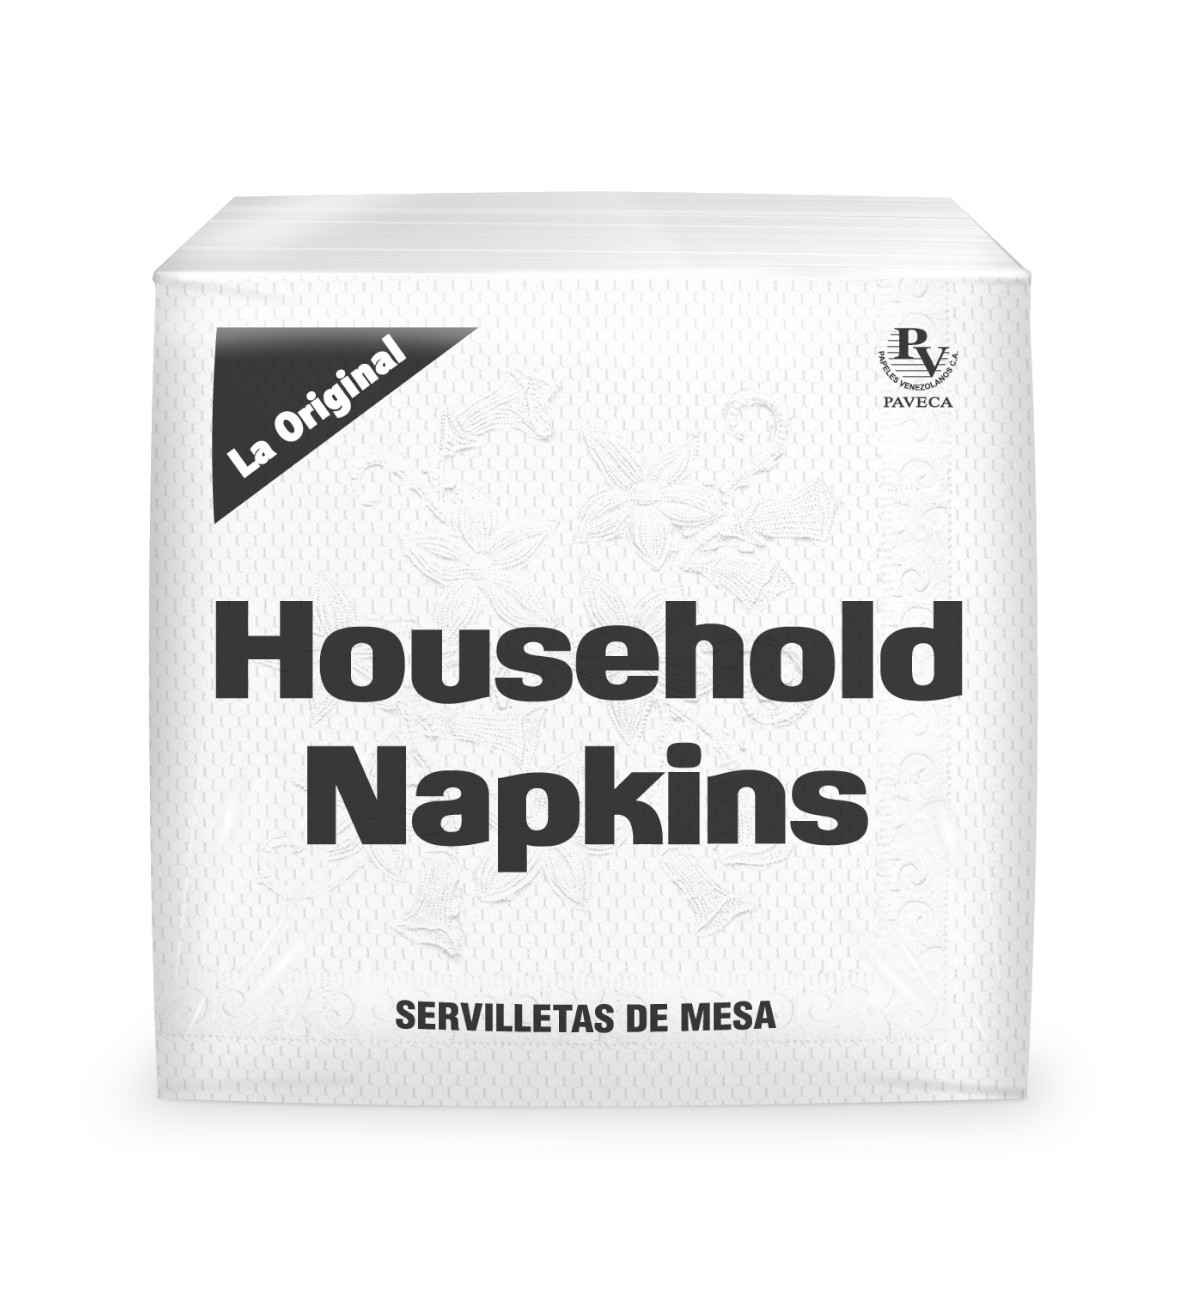 Servilleta de Mesa Household Napkins x 170